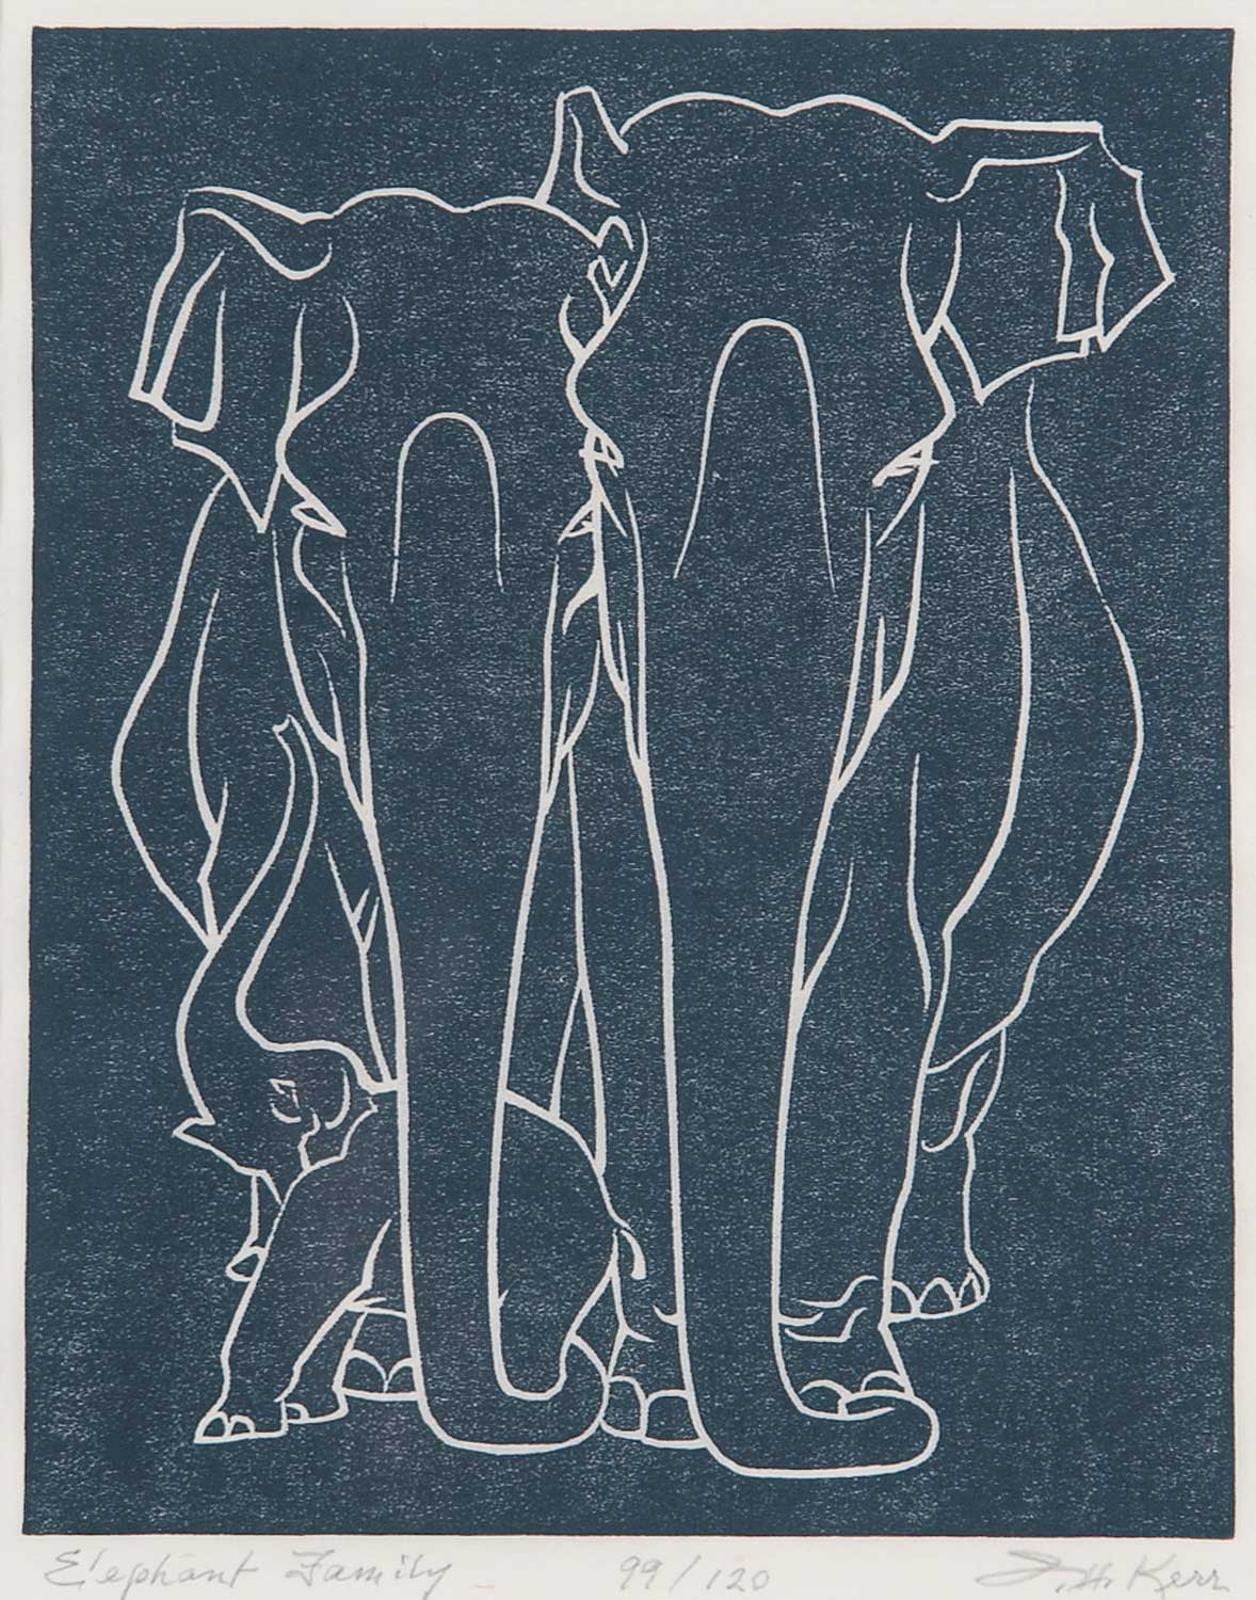 Illingworth Holey (Buck) Kerr (1905-1989) - Elephant Family  #99/120